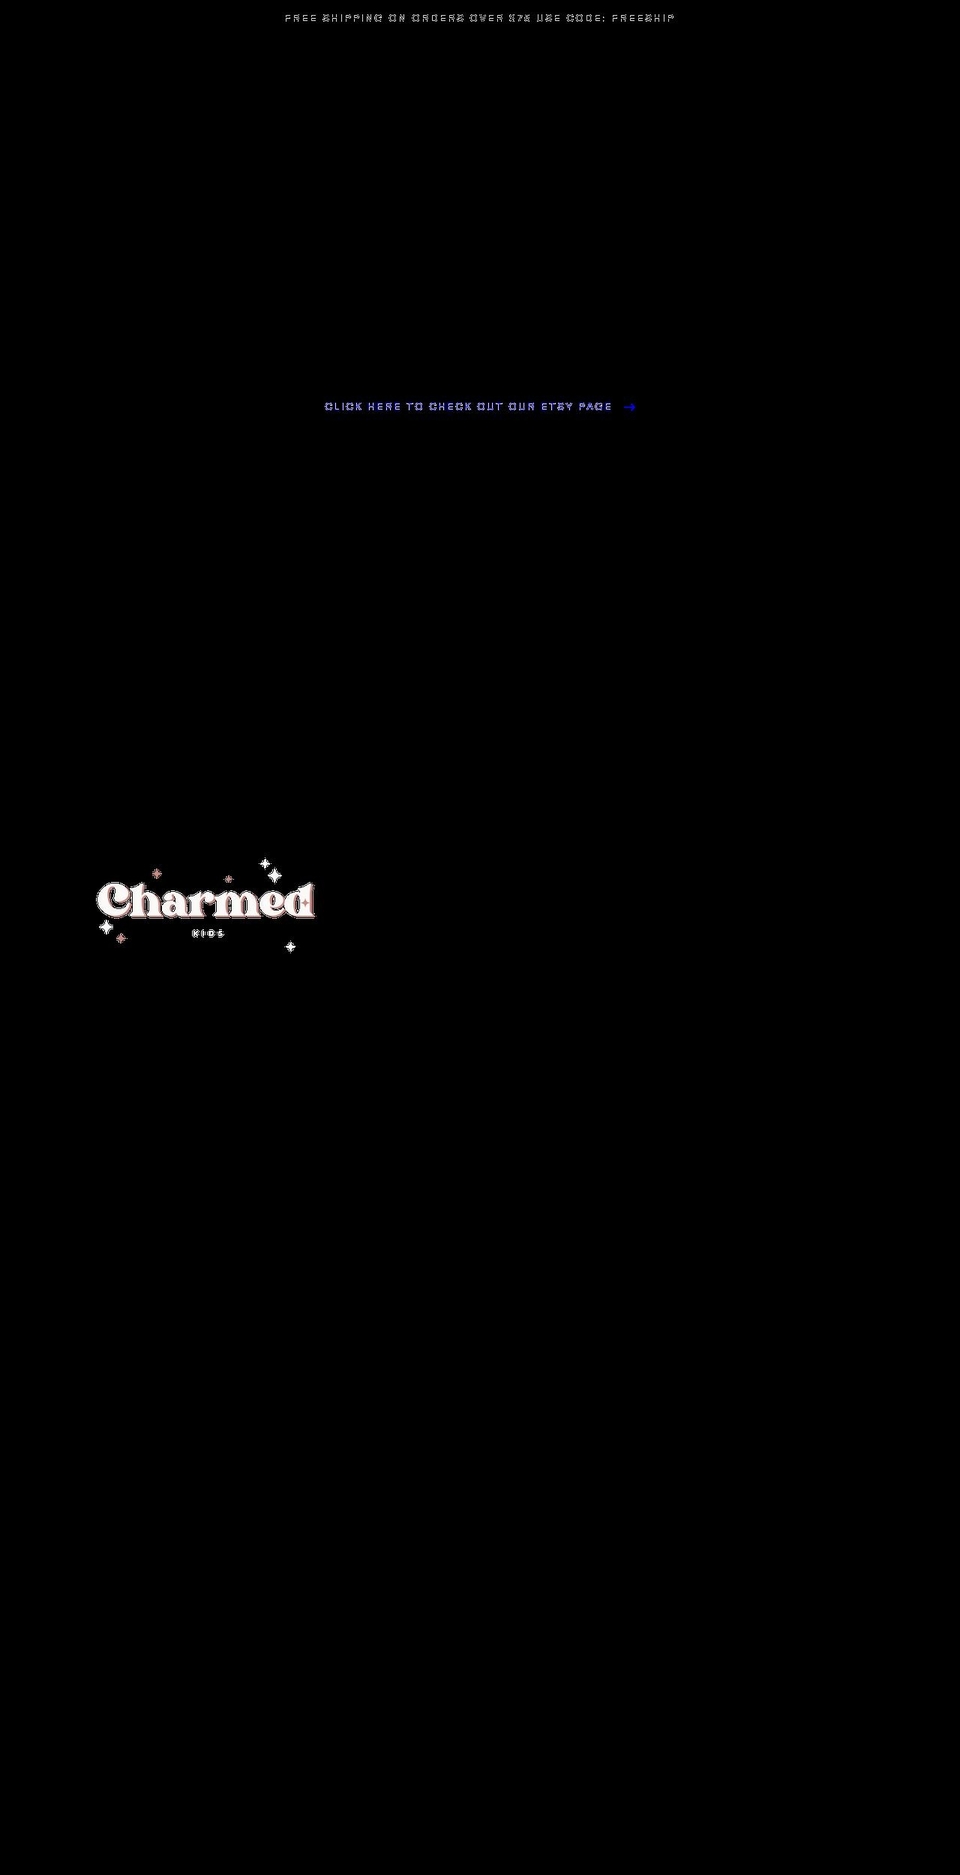 charmedkids.com shopify website screenshot